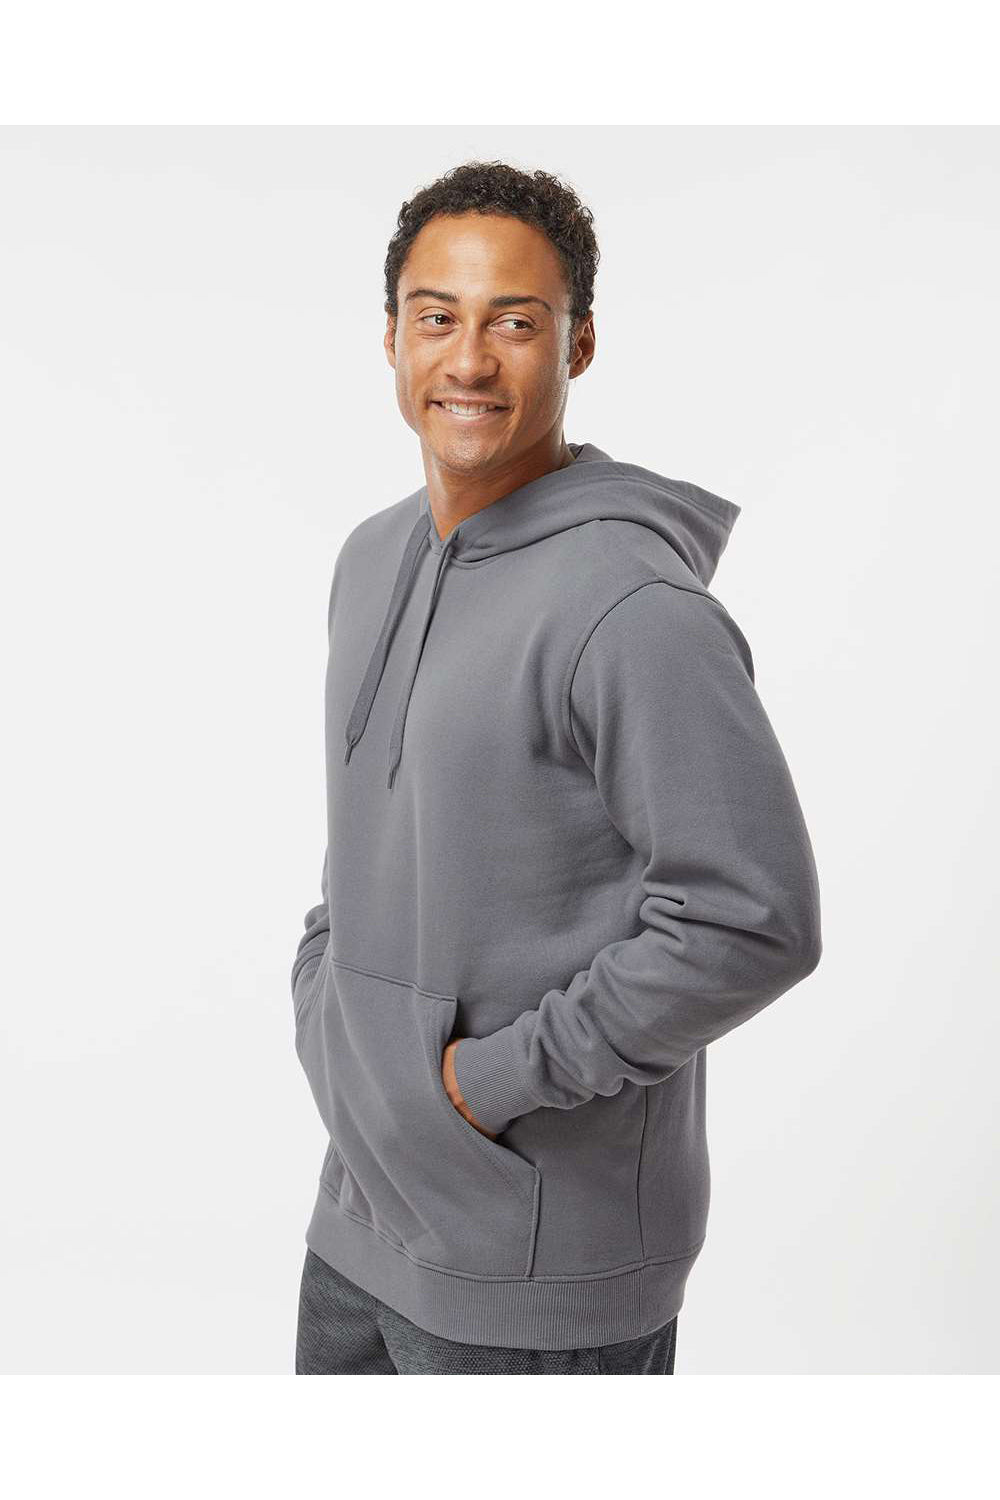 Augusta Sportswear 5414 Mens Fleece Hooded Sweatshirt Hoodie Graphite Grey Model Side